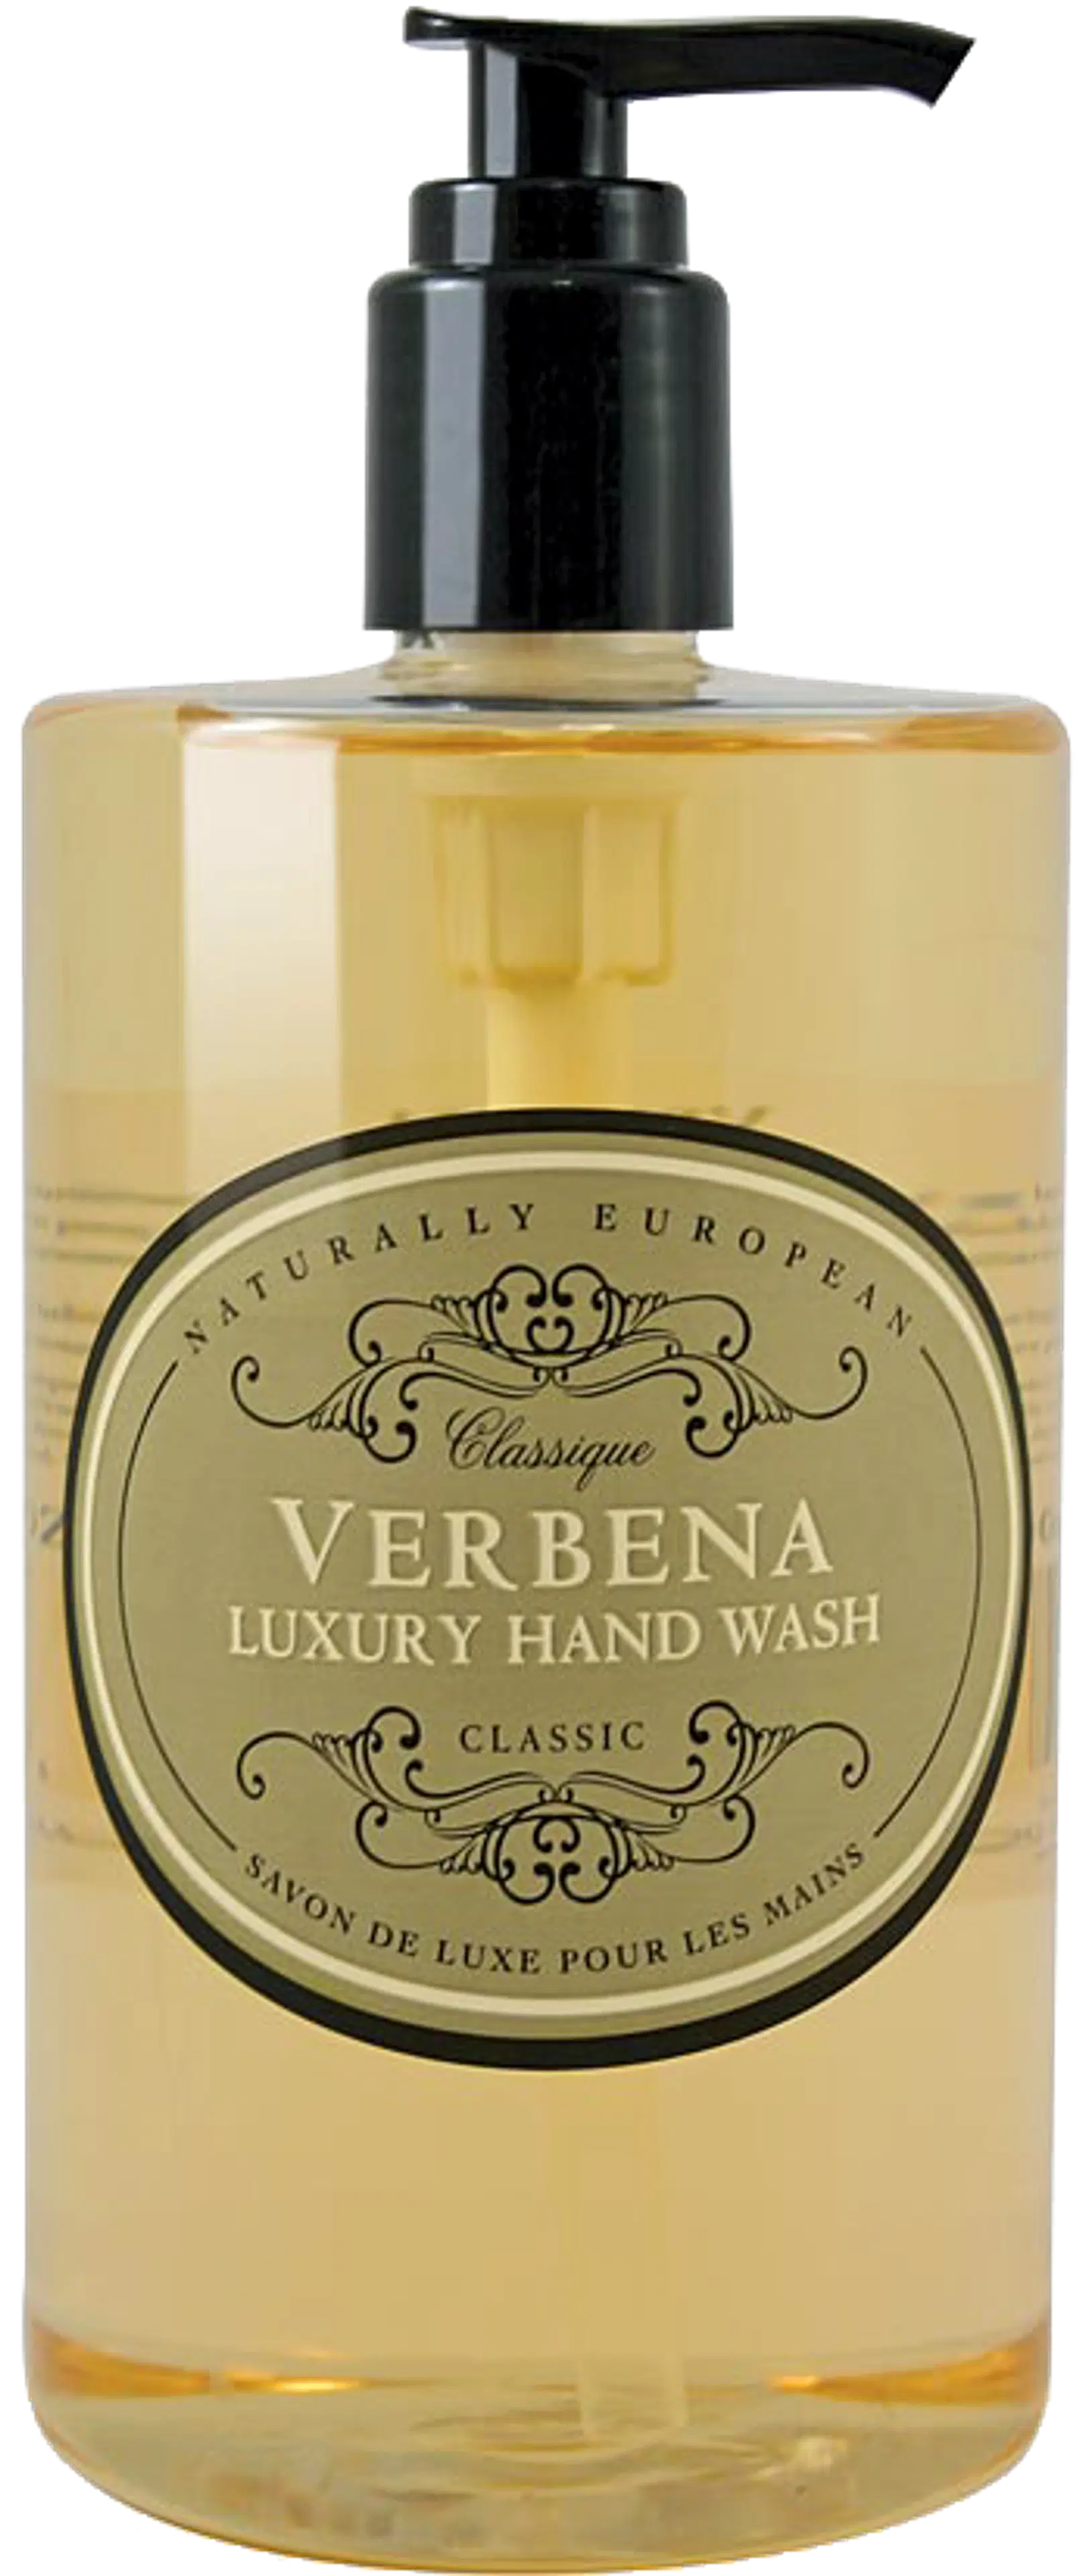 Naturally European Verbena Luxury Hand Wash käsisaippua 500 ml